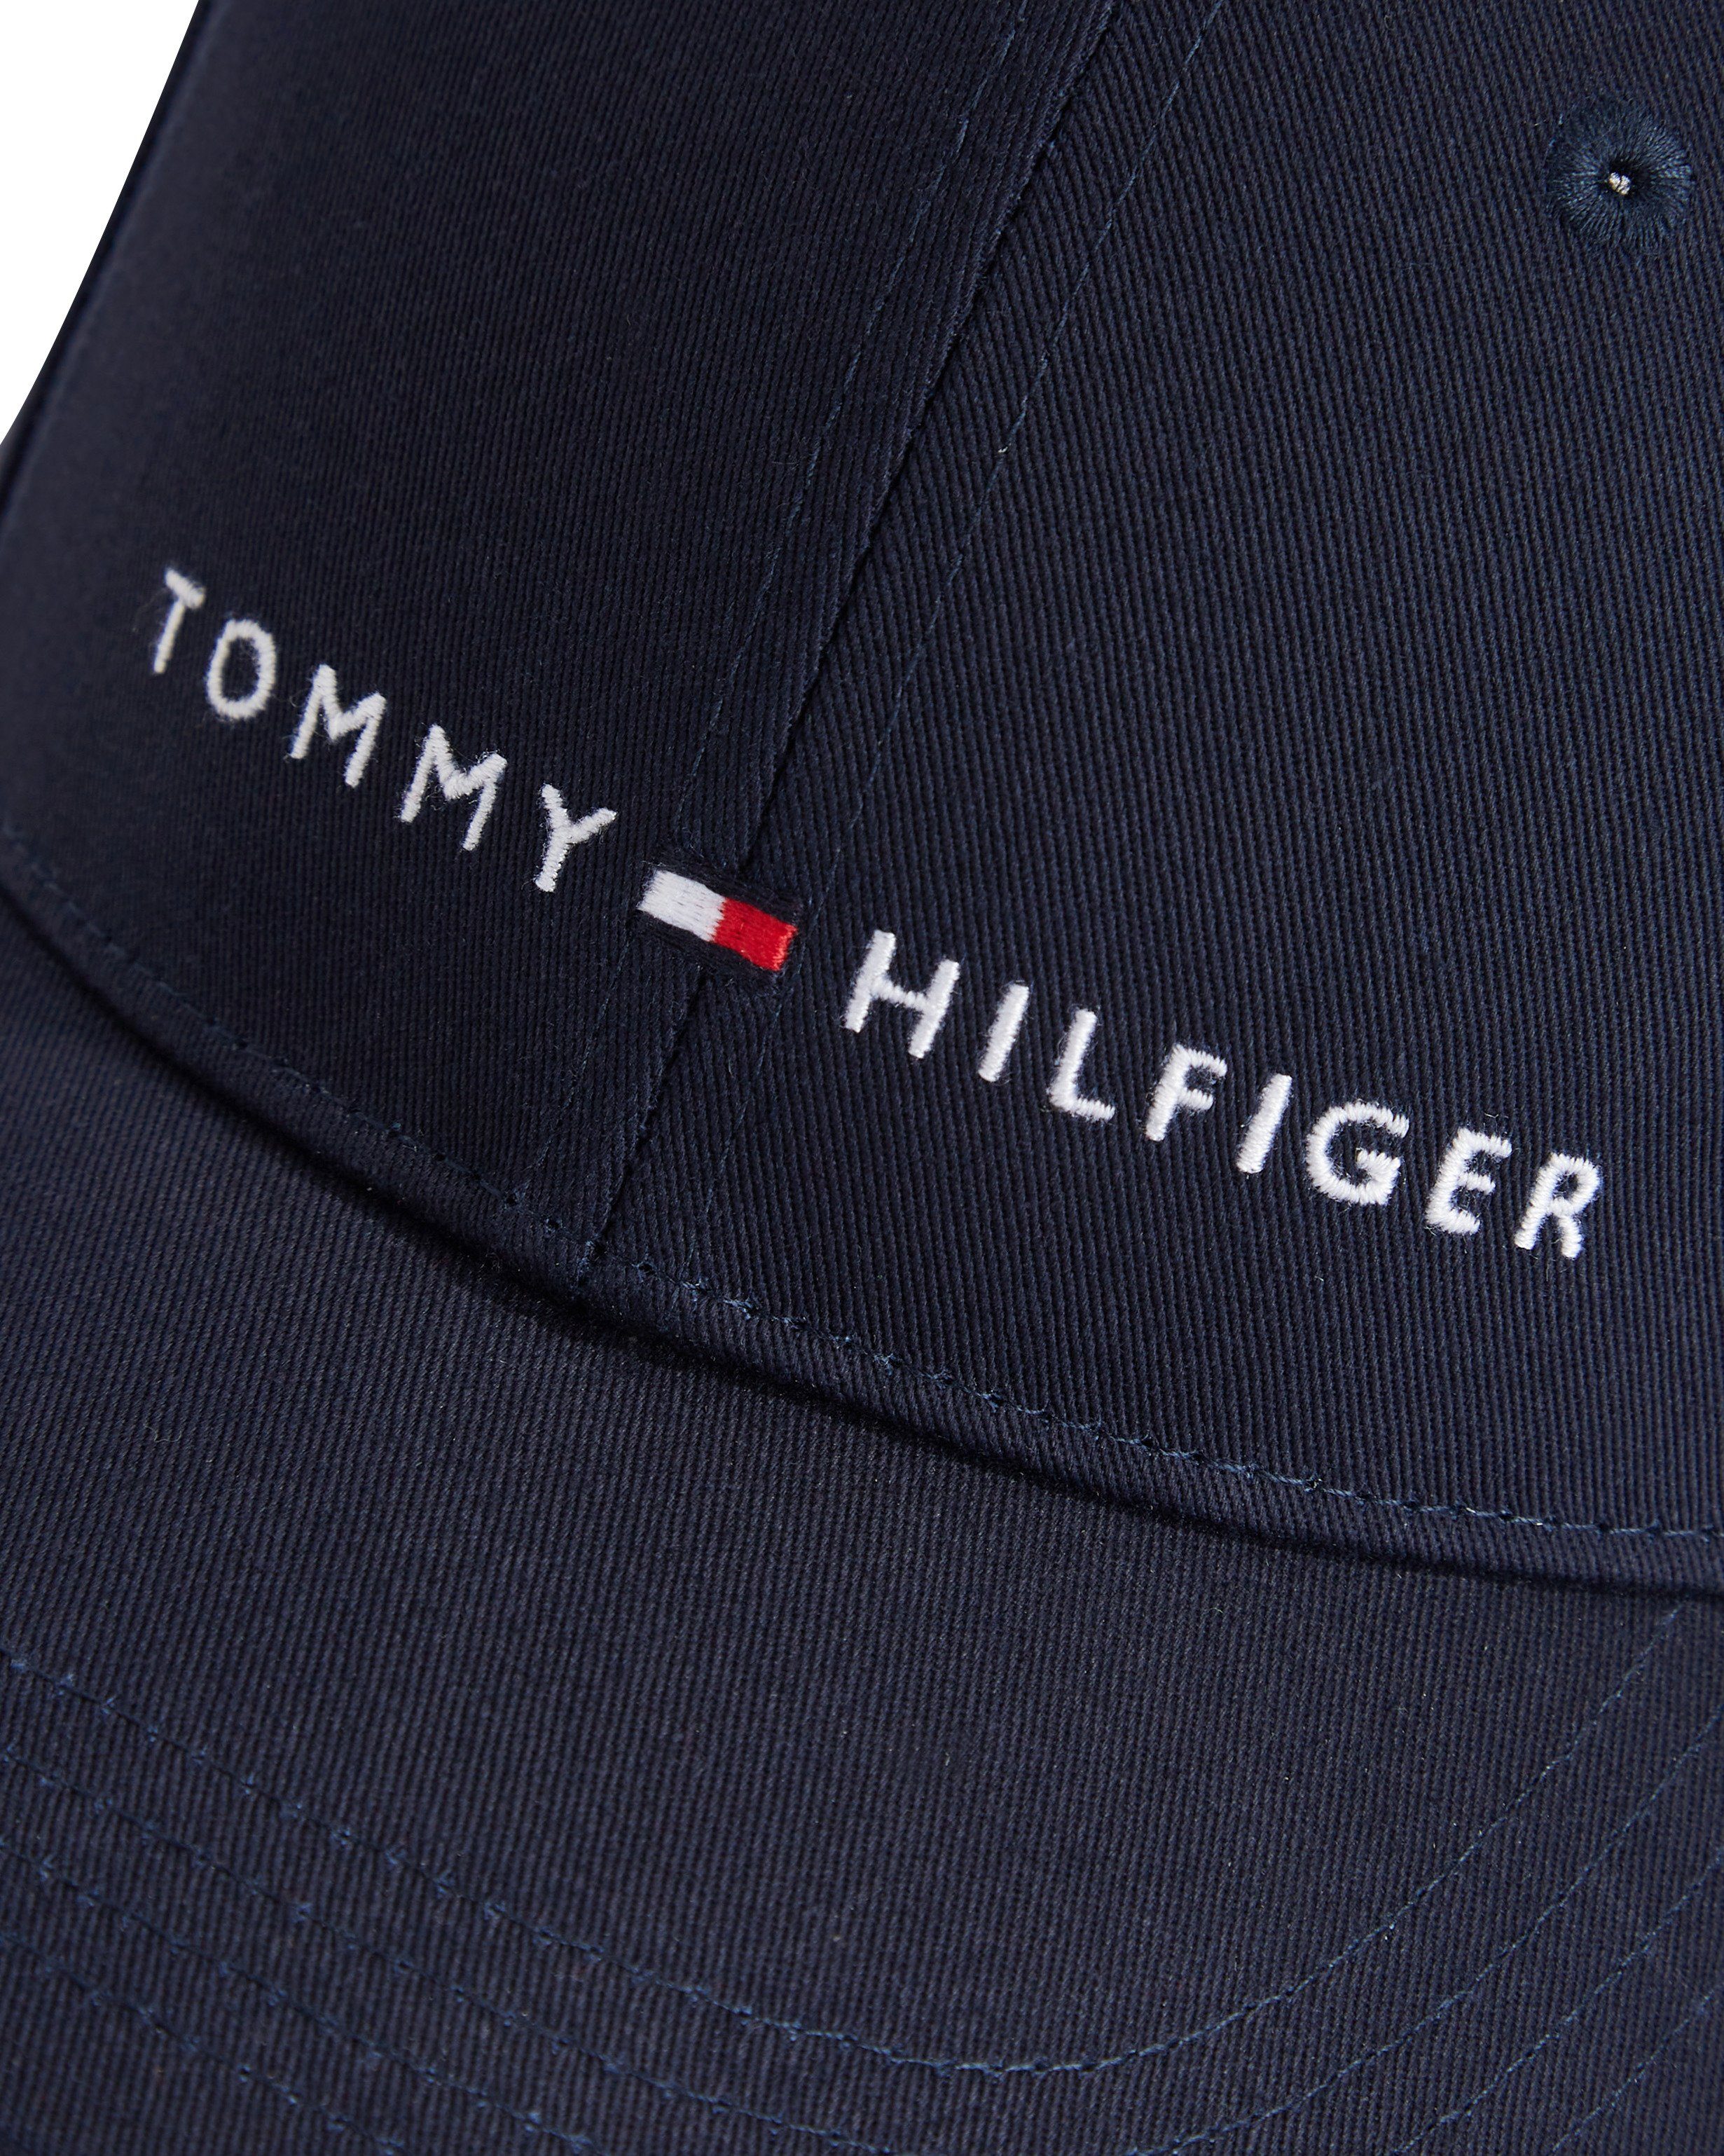 verstellbare navy mit Essential Branding Snapback Cap Kinder Hilfiger Tommy Cap